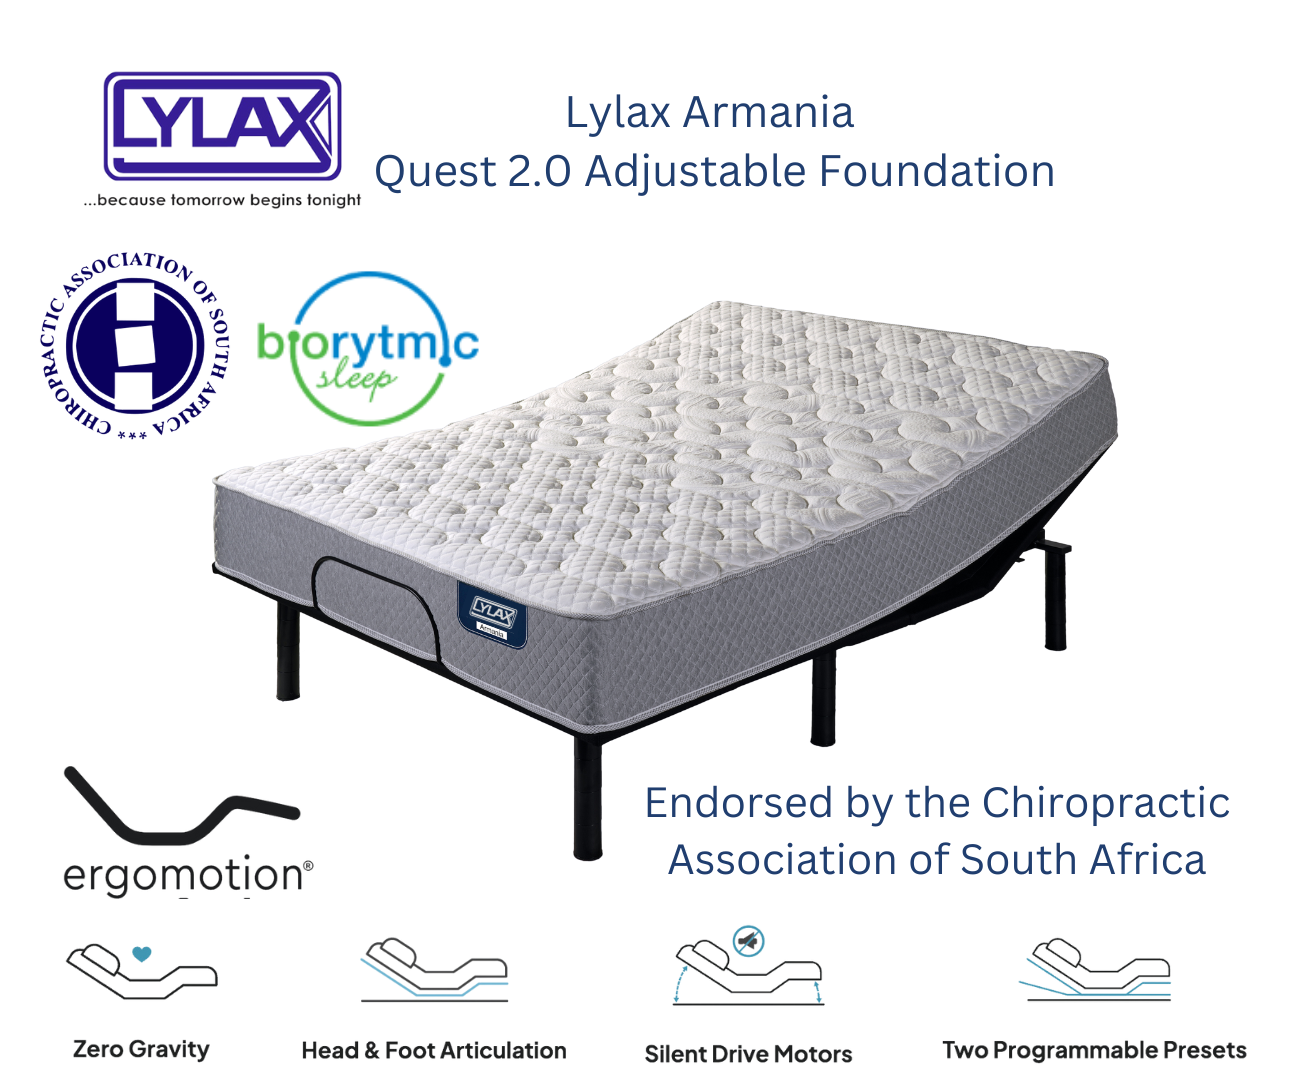 Lylax Armania Premium Quest 2.0 adjustable foundation